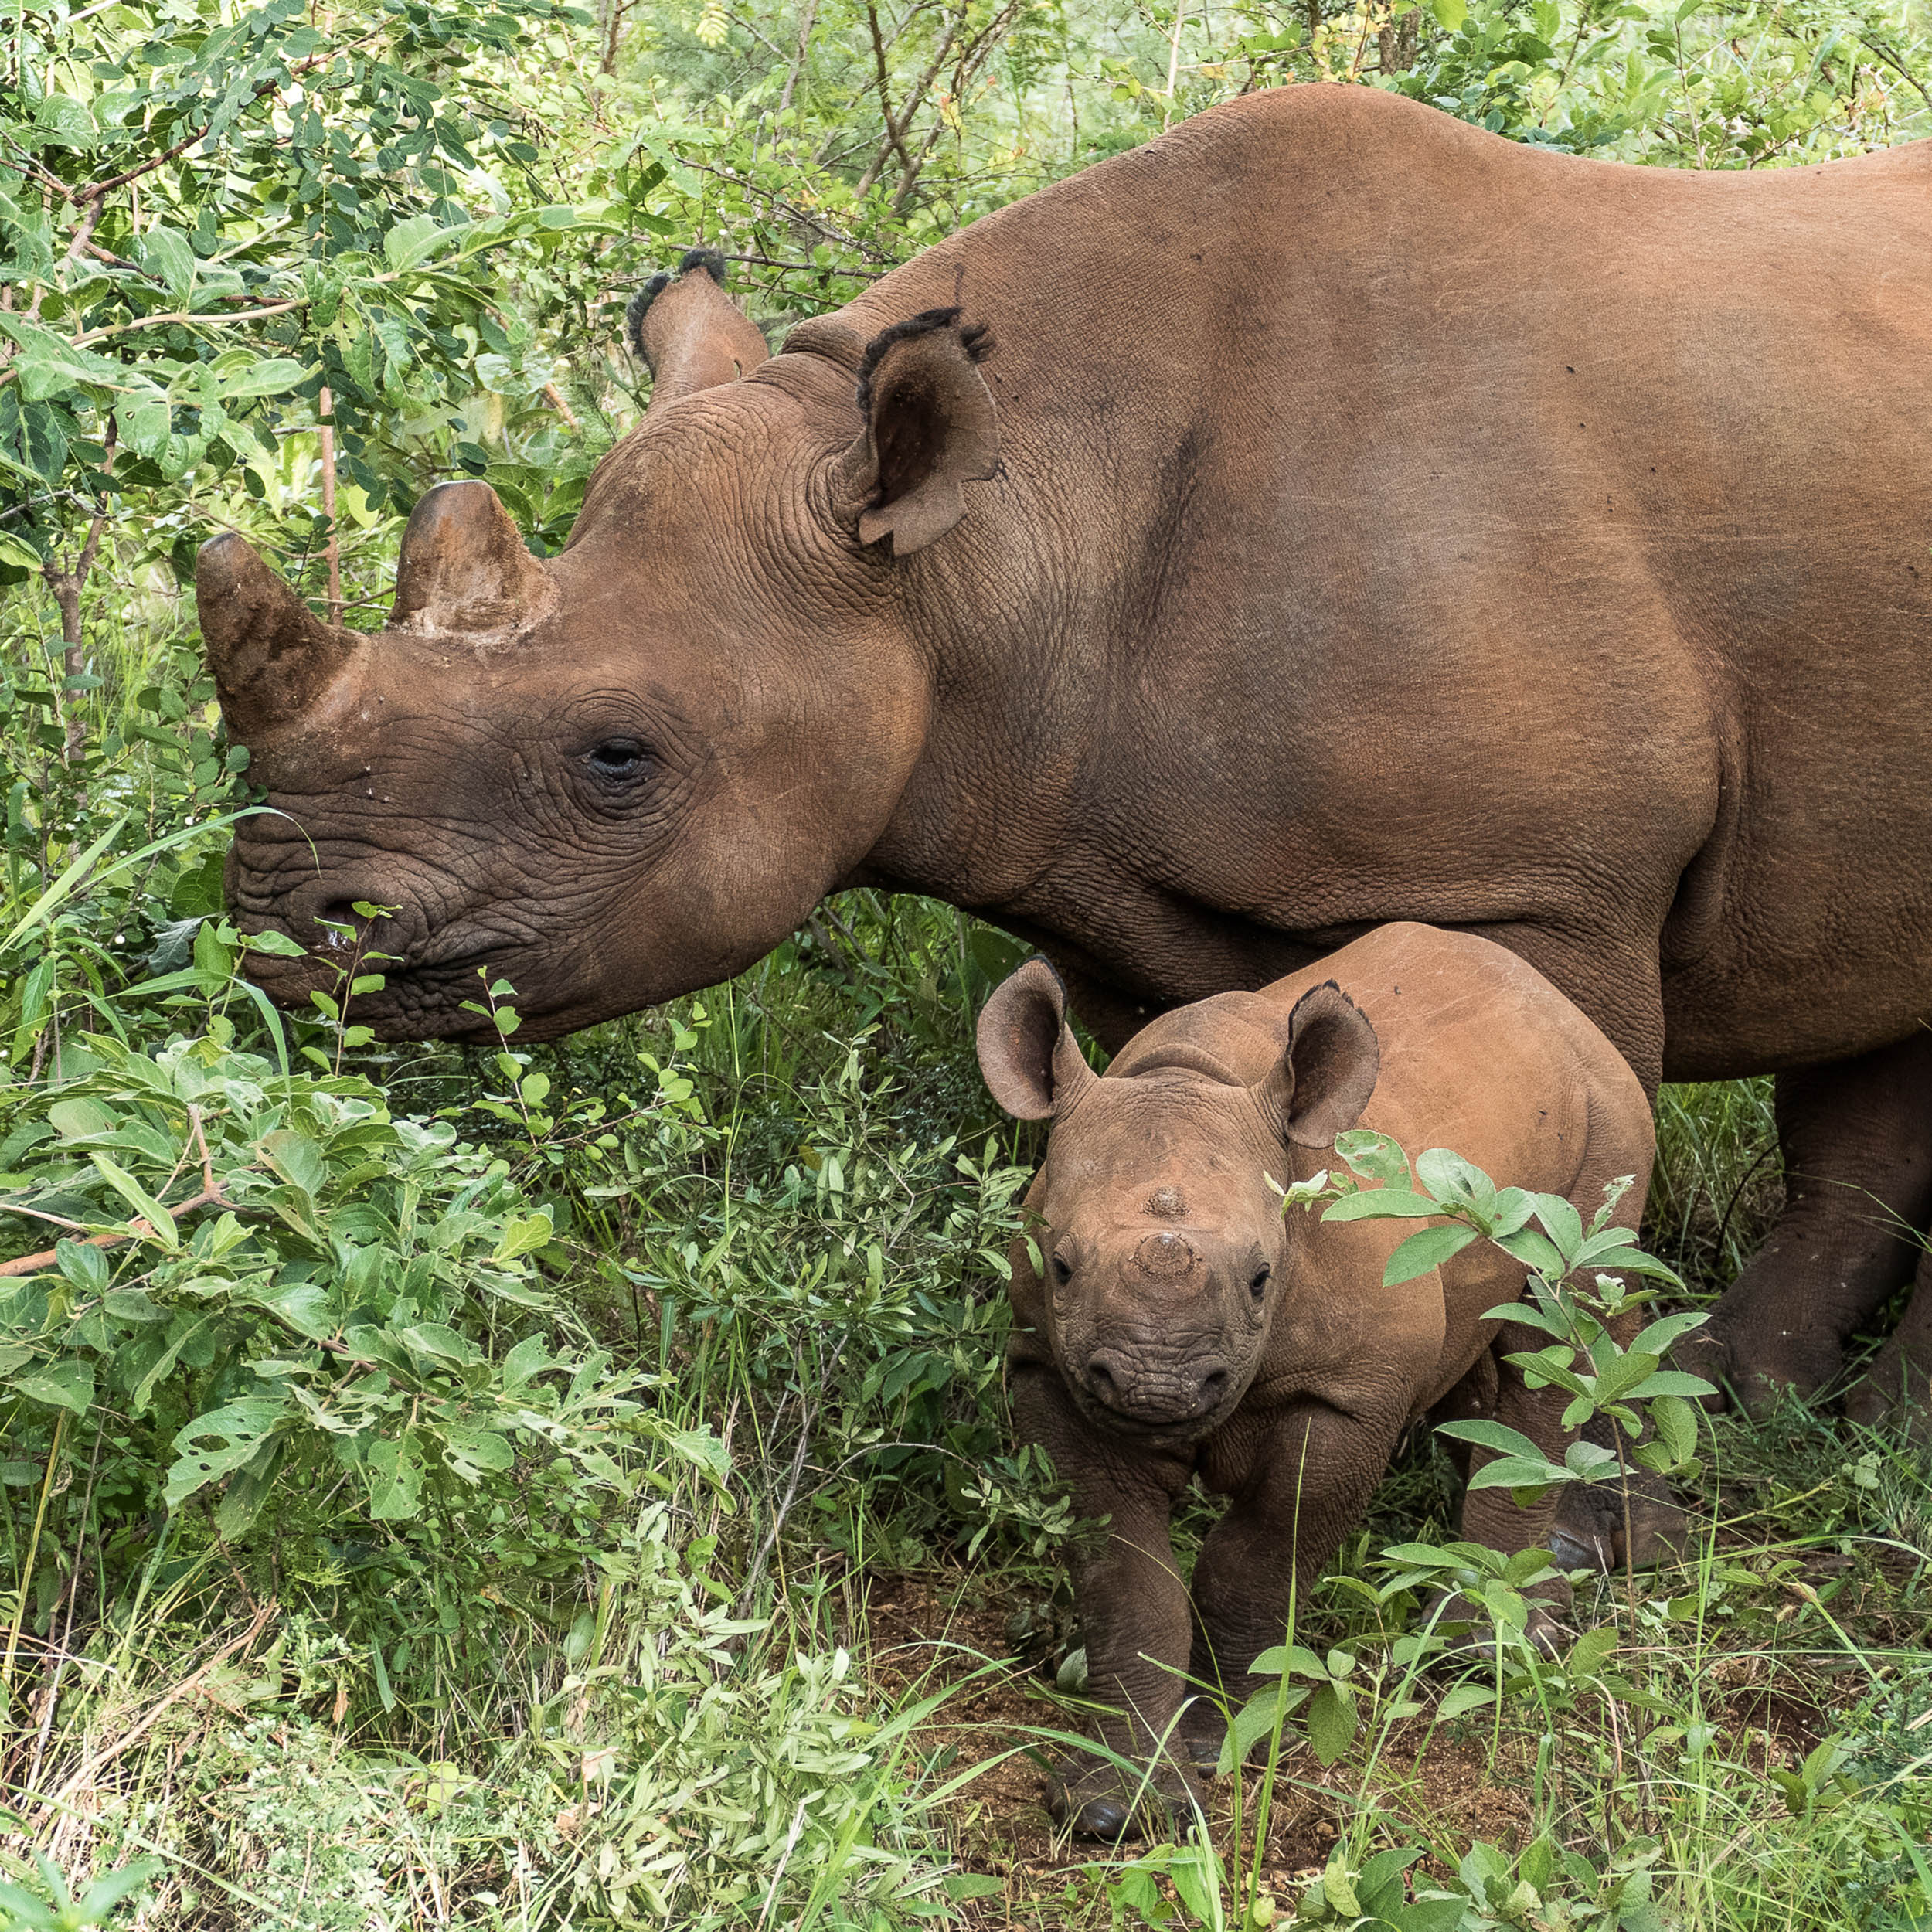 Elephant rhino. Wildlife and Conservation... Volunteering.